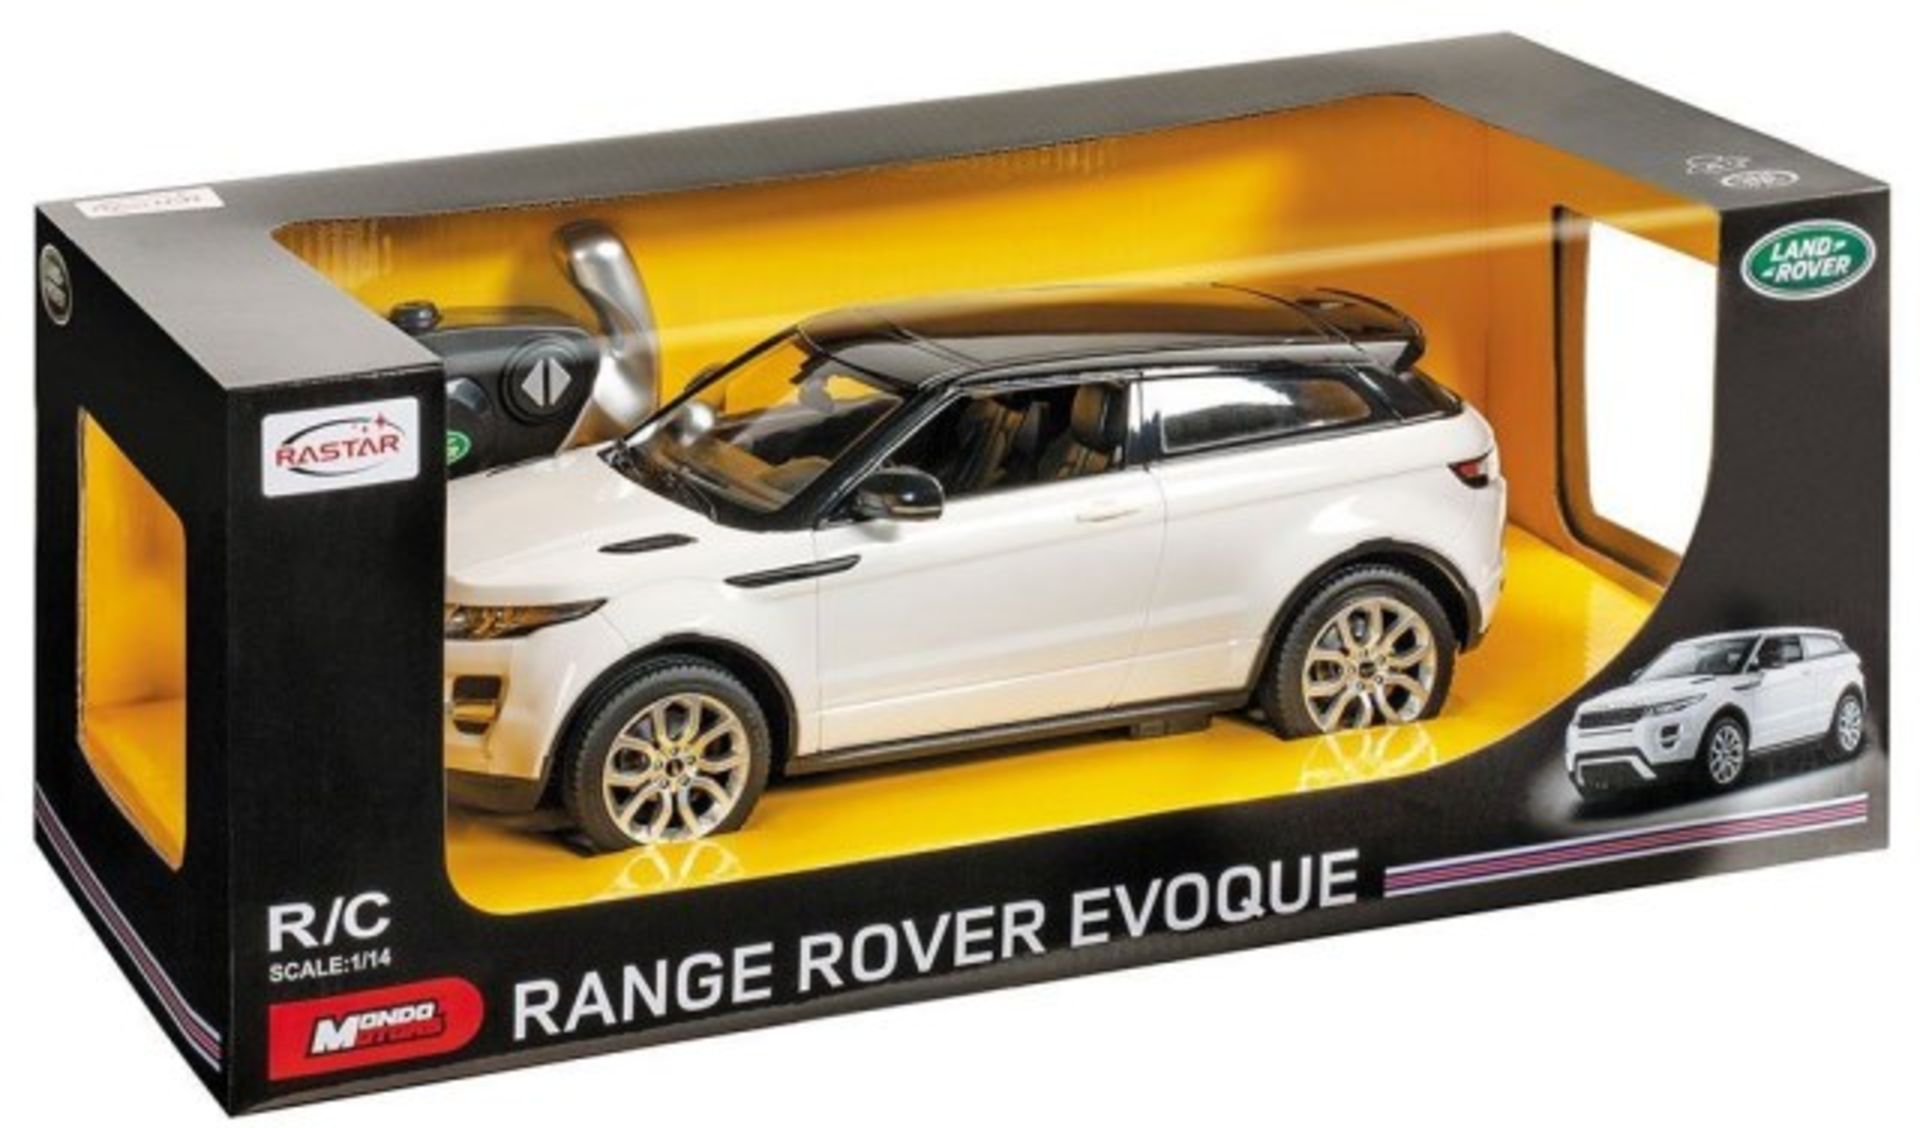 + VAT Brand New 1:14 Scale R/C Range Rover Evoque SRP49.99 Various Colours